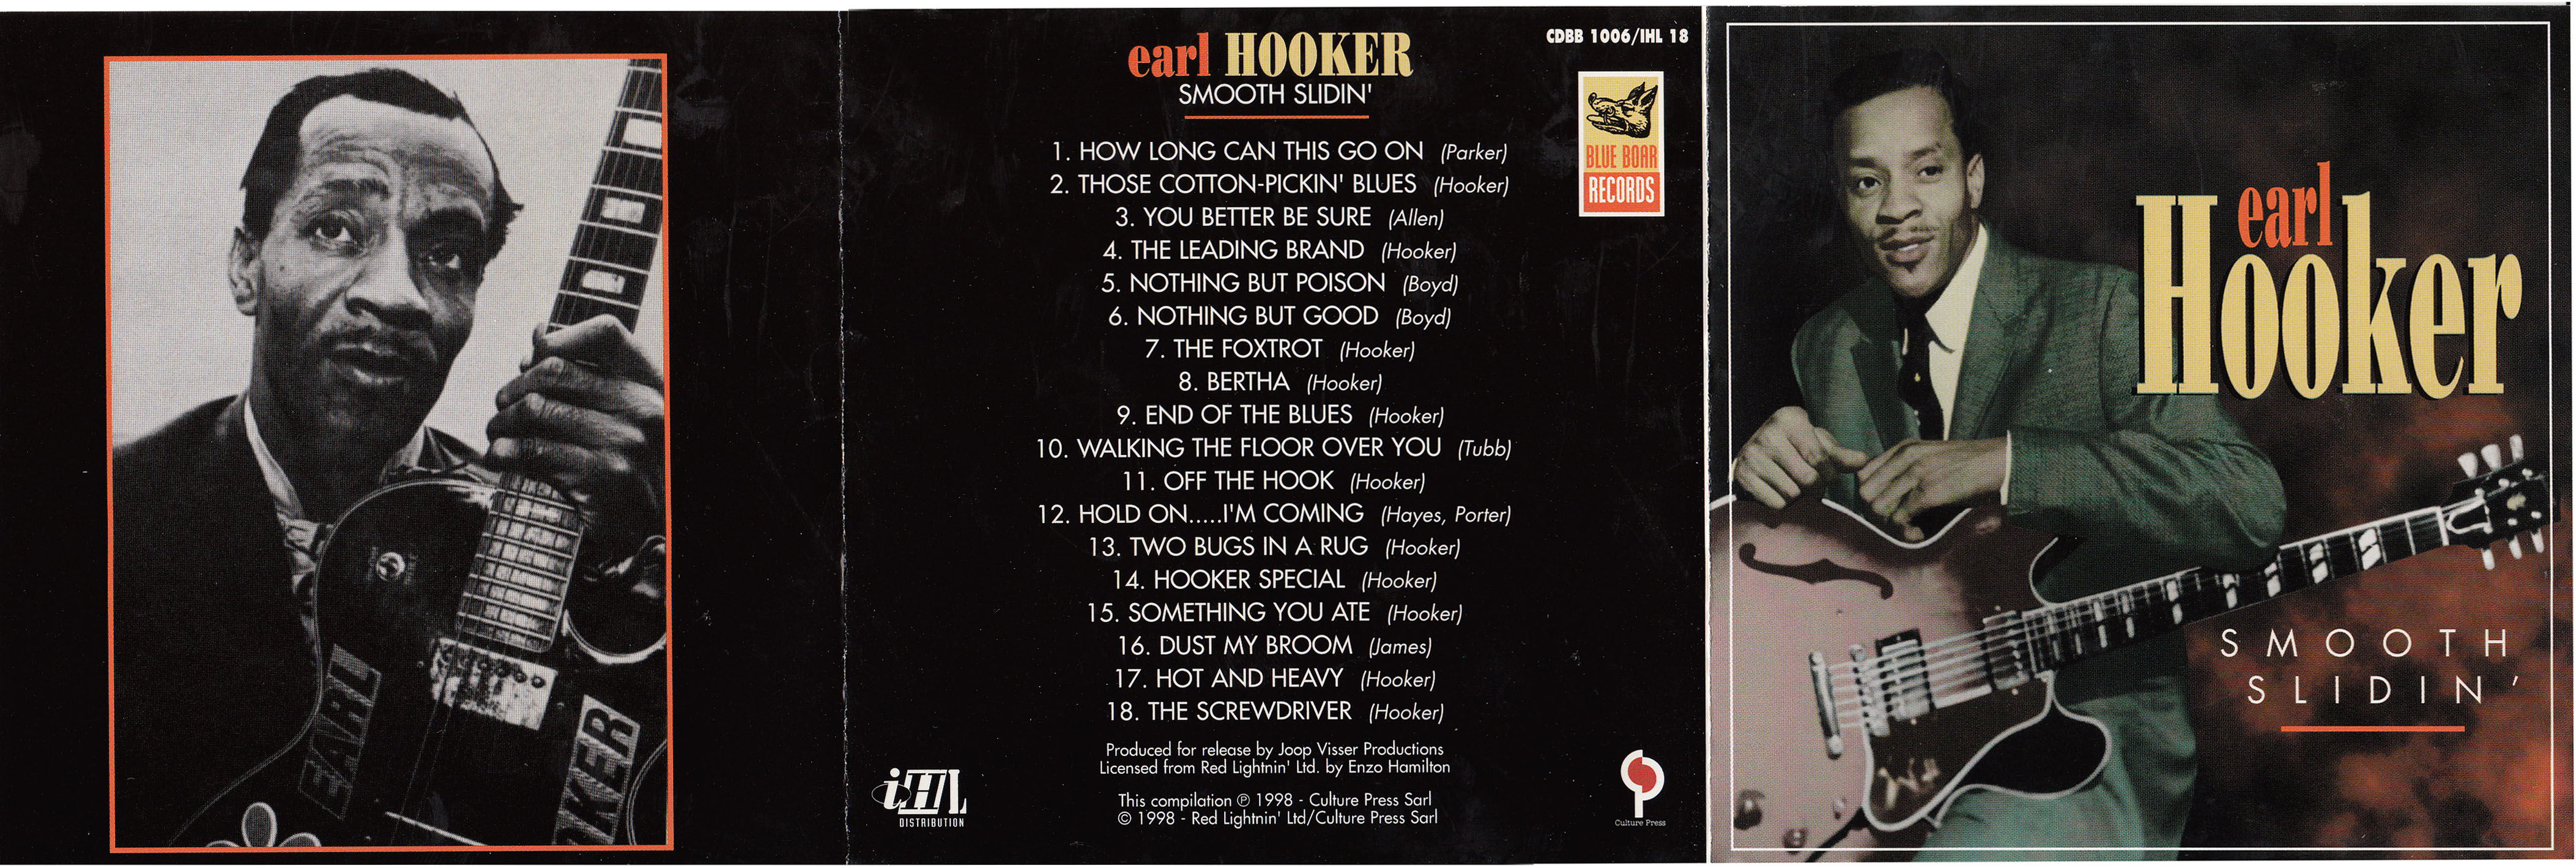 Earl Hooker - 1998 - Smooth Slidin'